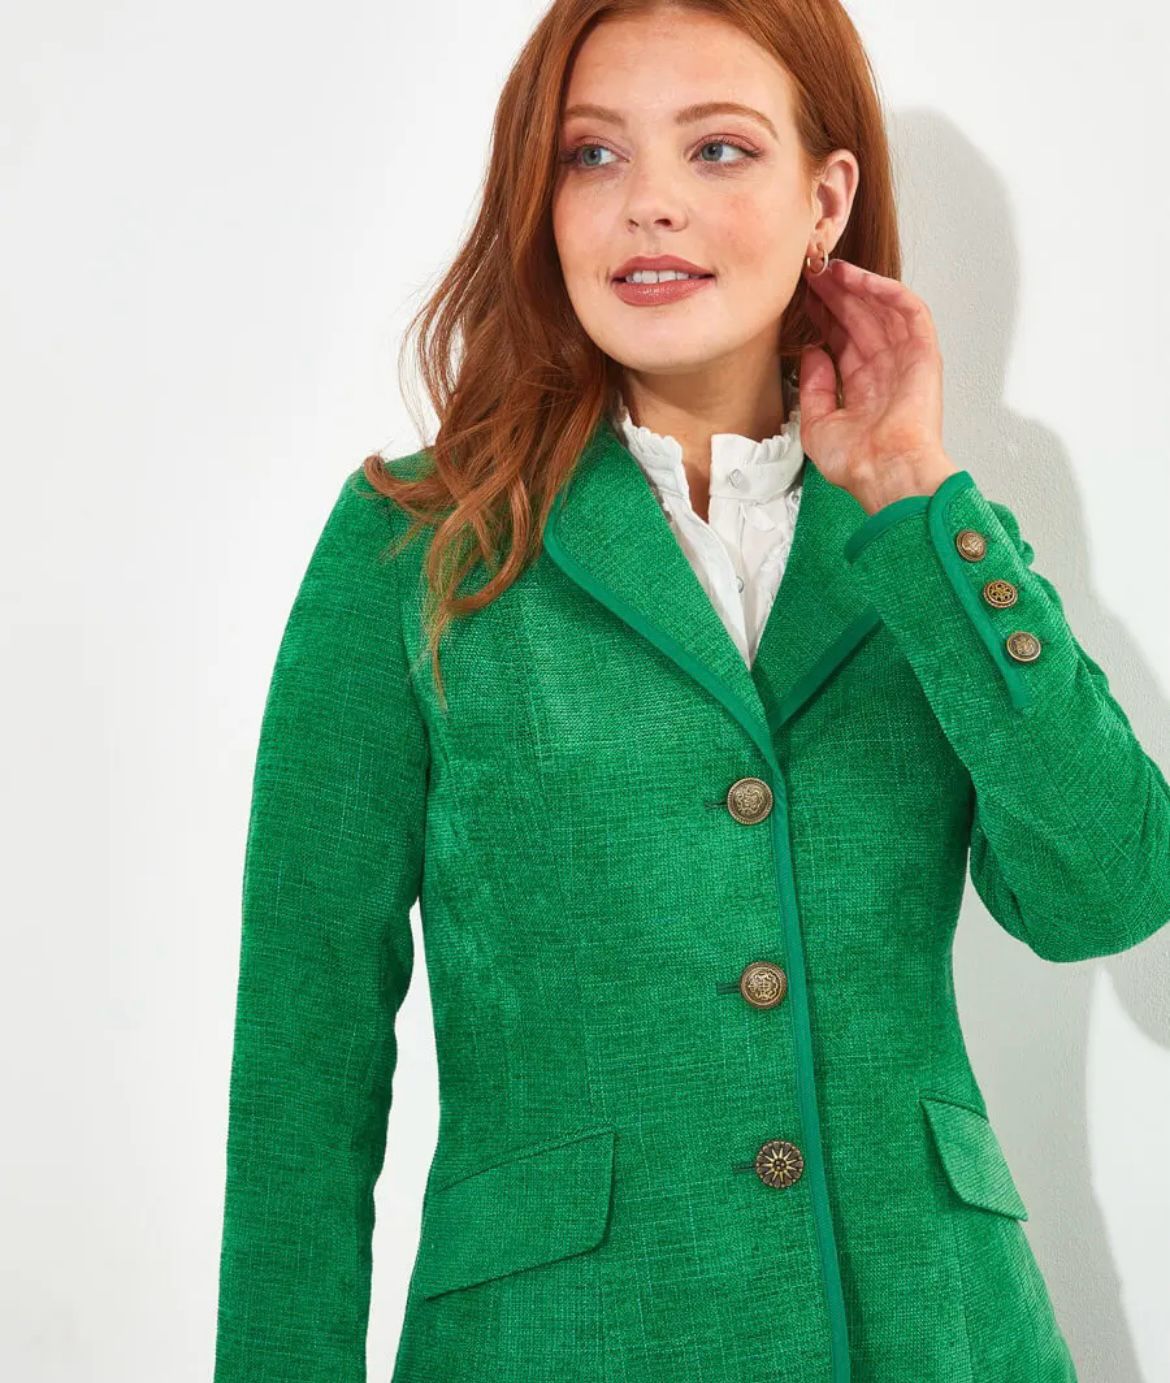 Camile Green Jacket